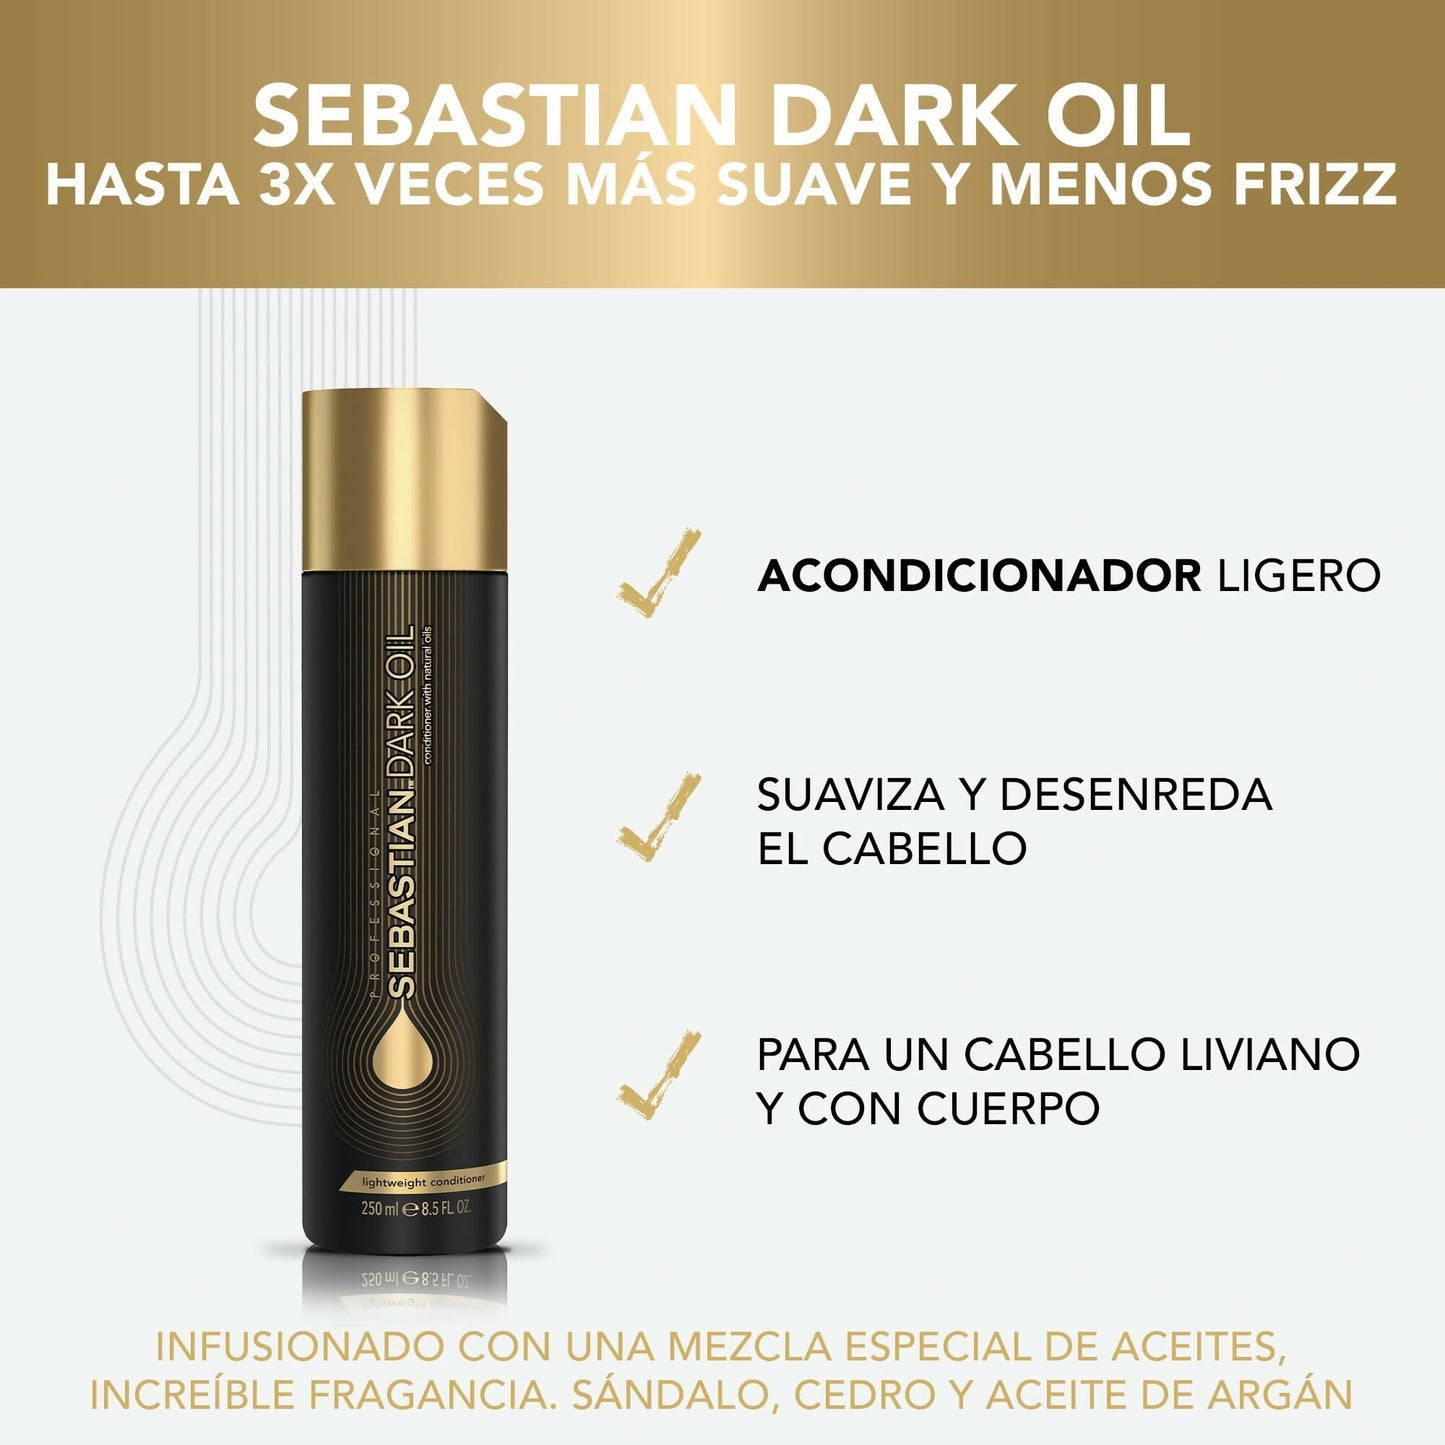 Sebastian Professional Dark Oil Lightweight Hair Conditioner for Smoothening Hair